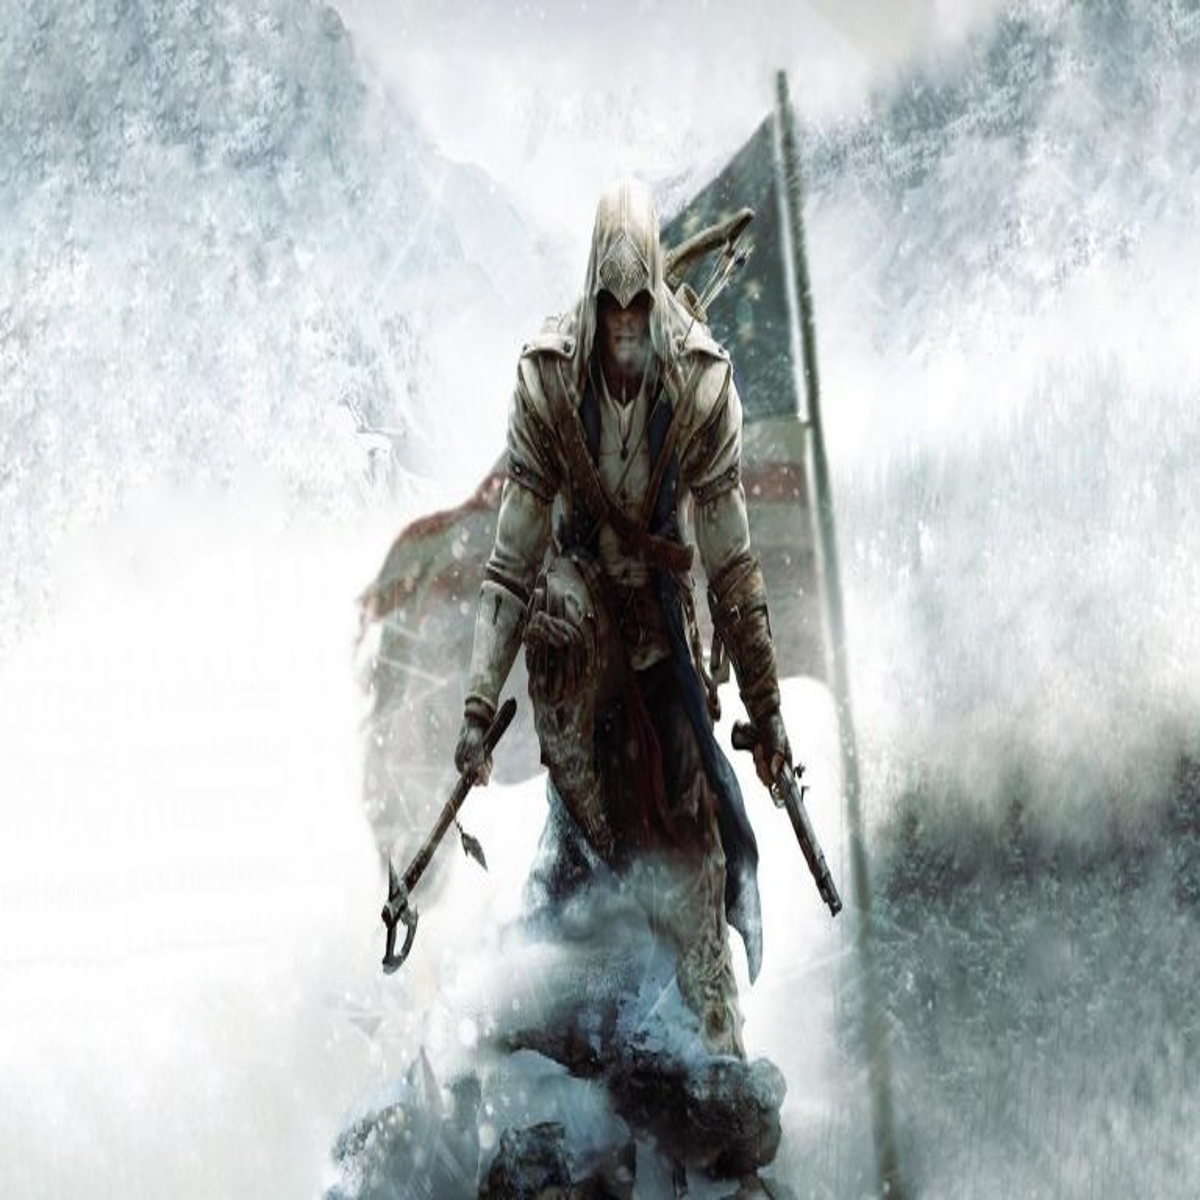 Assassin's Creed 3 - Full Game Walkthrough 